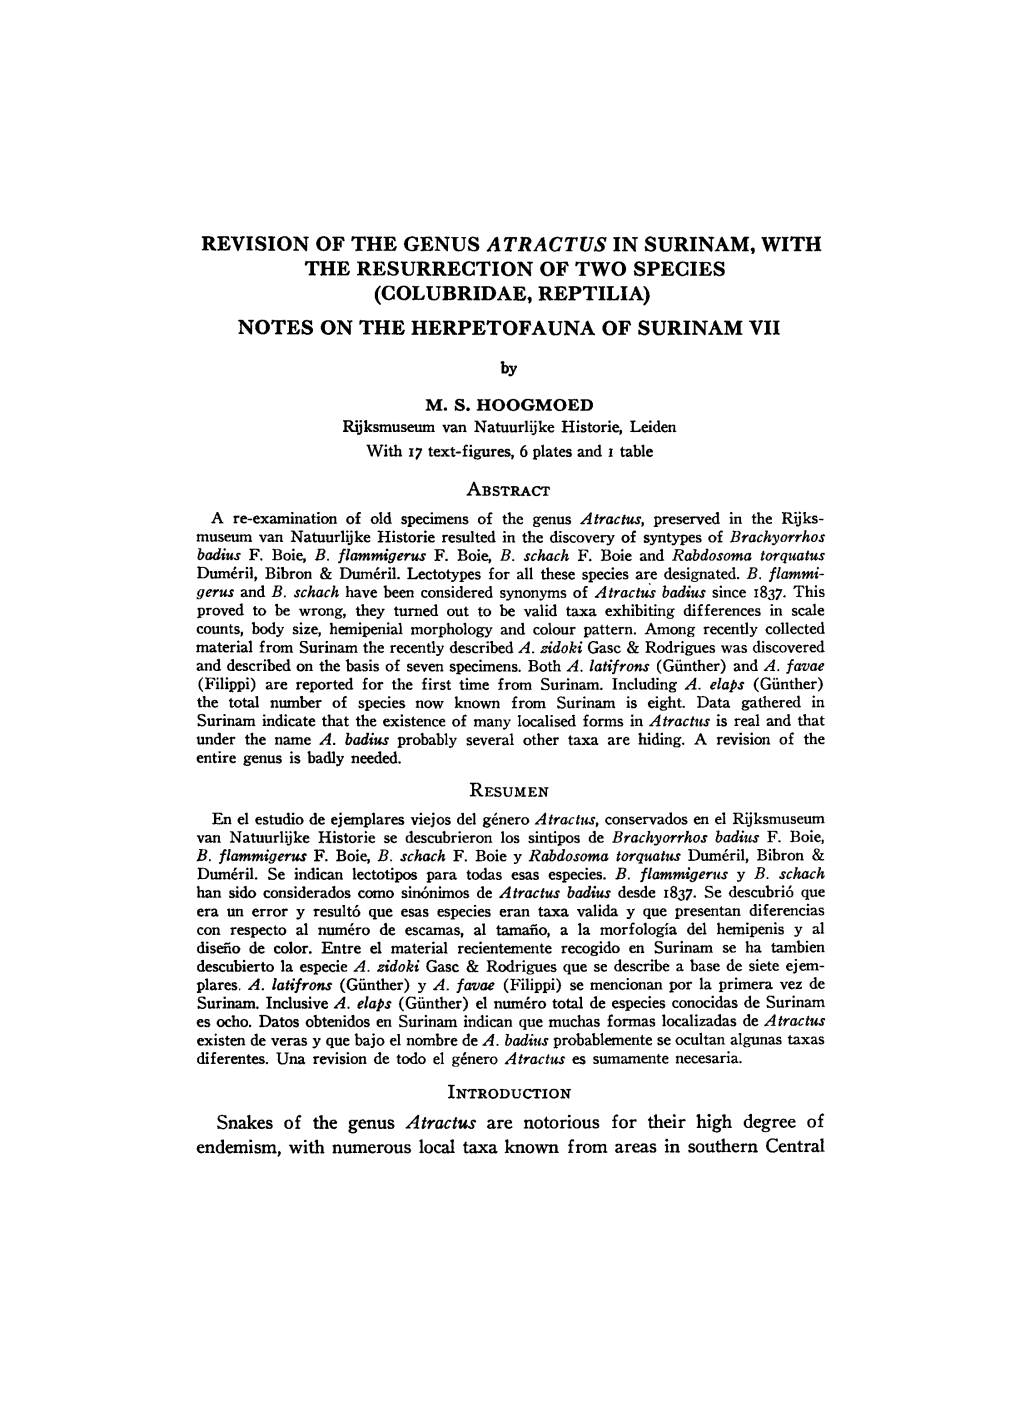 Revision of the Genus Atractus in Surinam, with the Resurrection of Two Species (Colubridae, Reptilia)